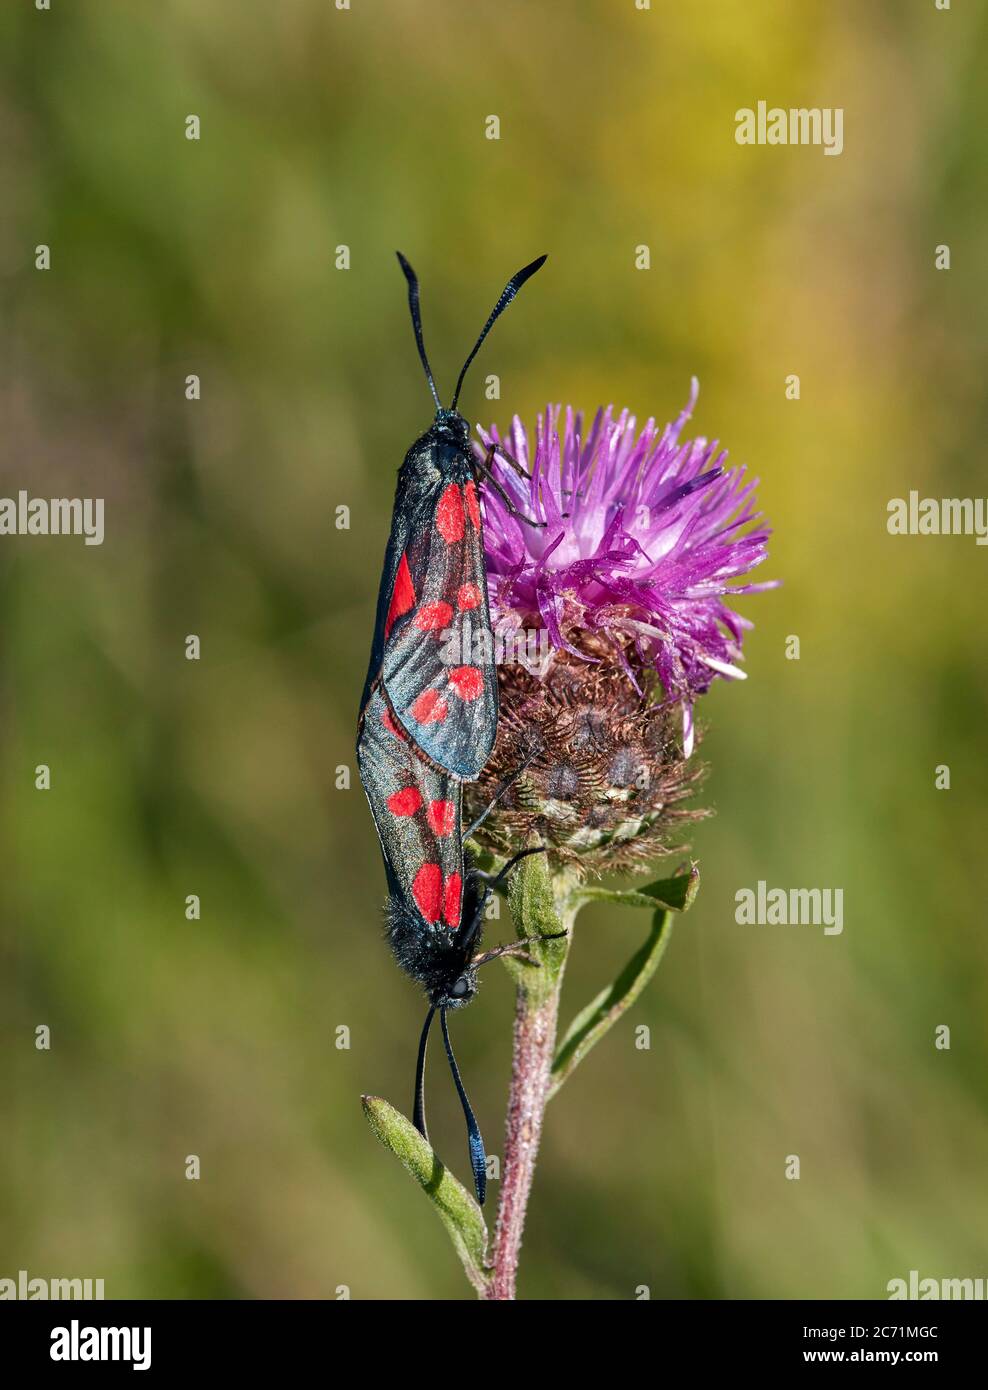 Pair of Six-spot Burnet moths on Knapweed flower. Hurst Meadows, East Molesey, Surrey, England. Stock Photo